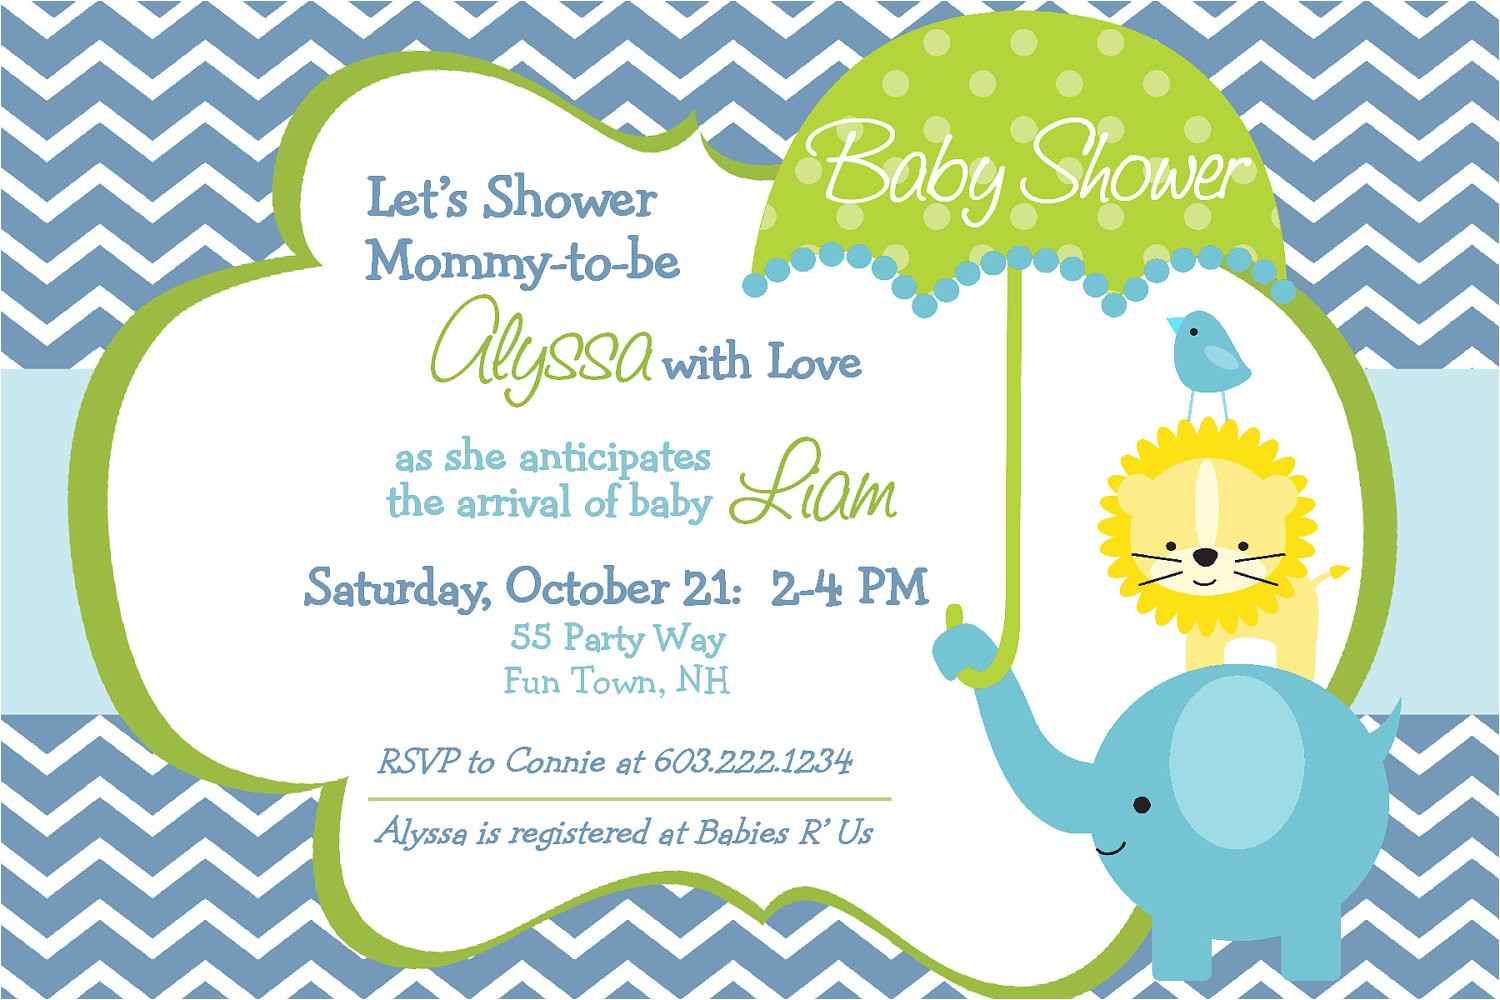 Baby Shower Invits Baby Shower Invitations for Boy & Girls Baby Shower